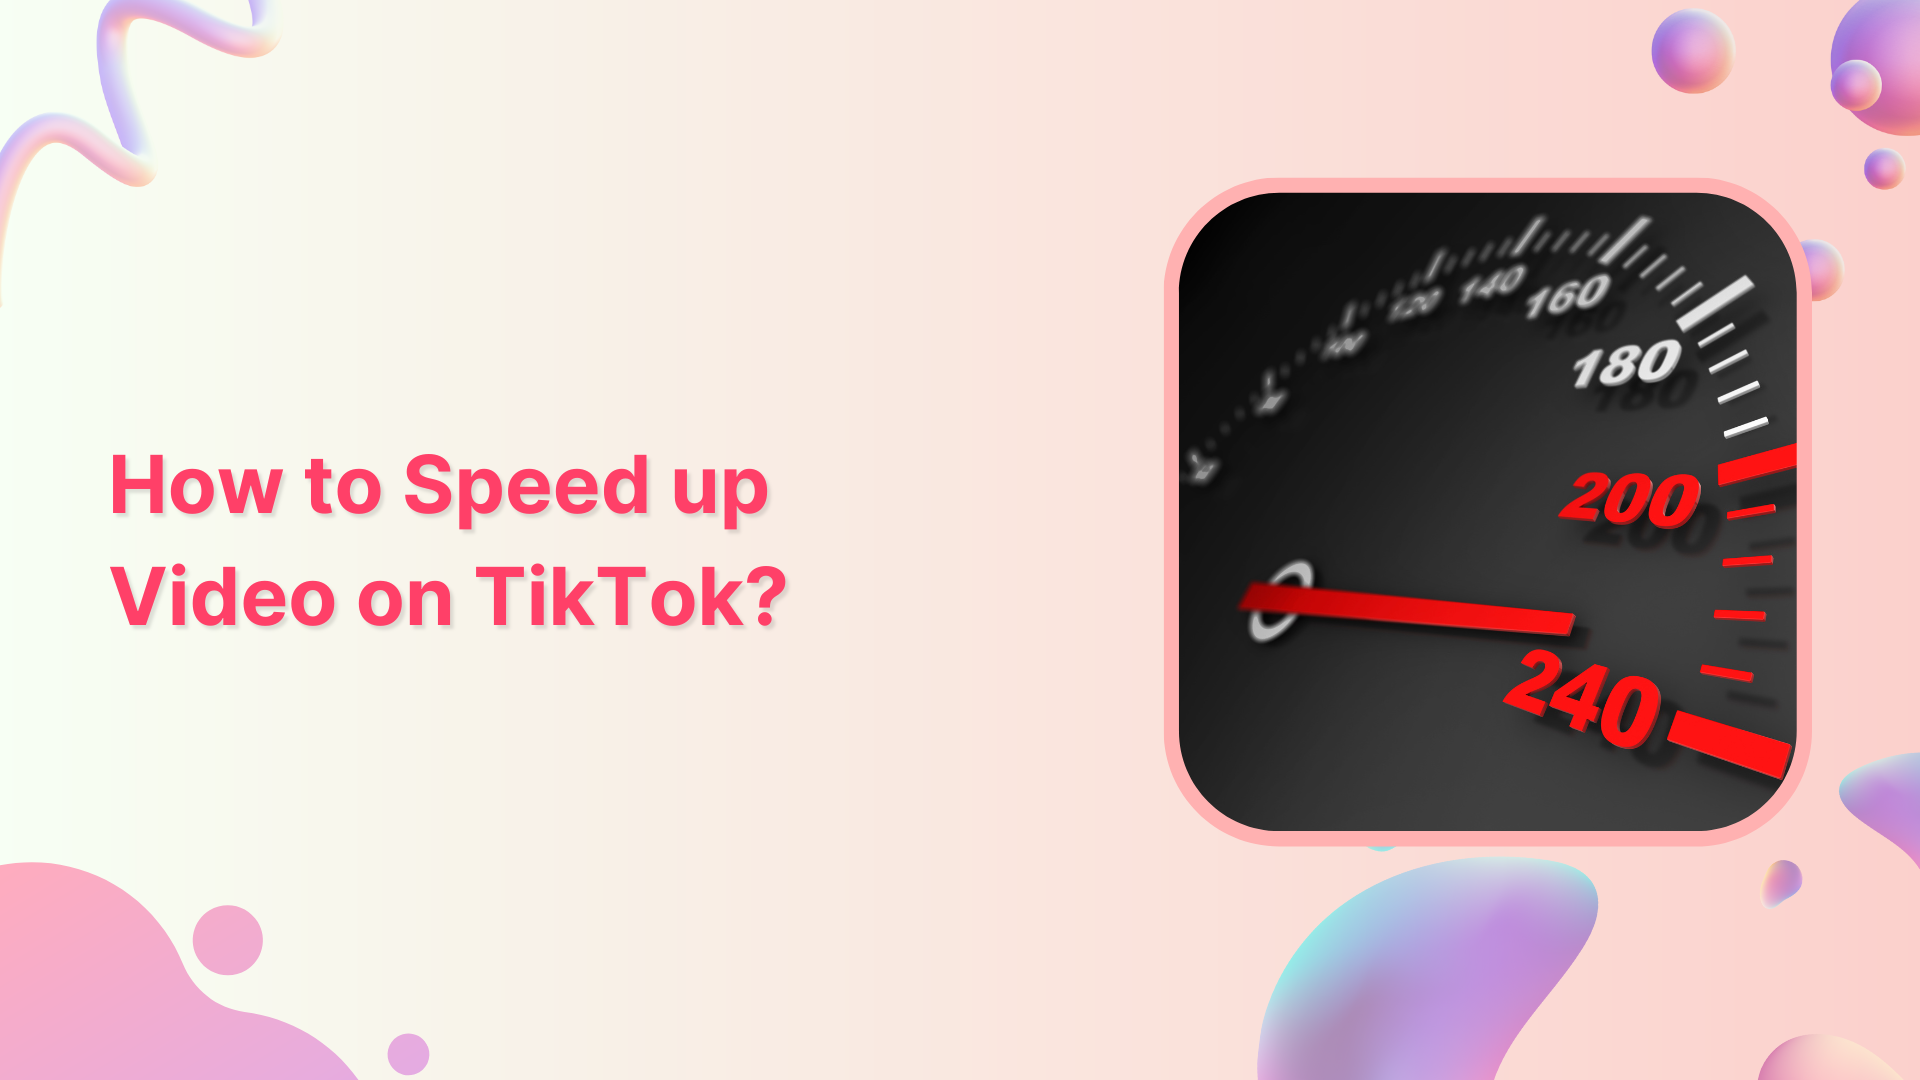 How to Speed up Video on TikTok?